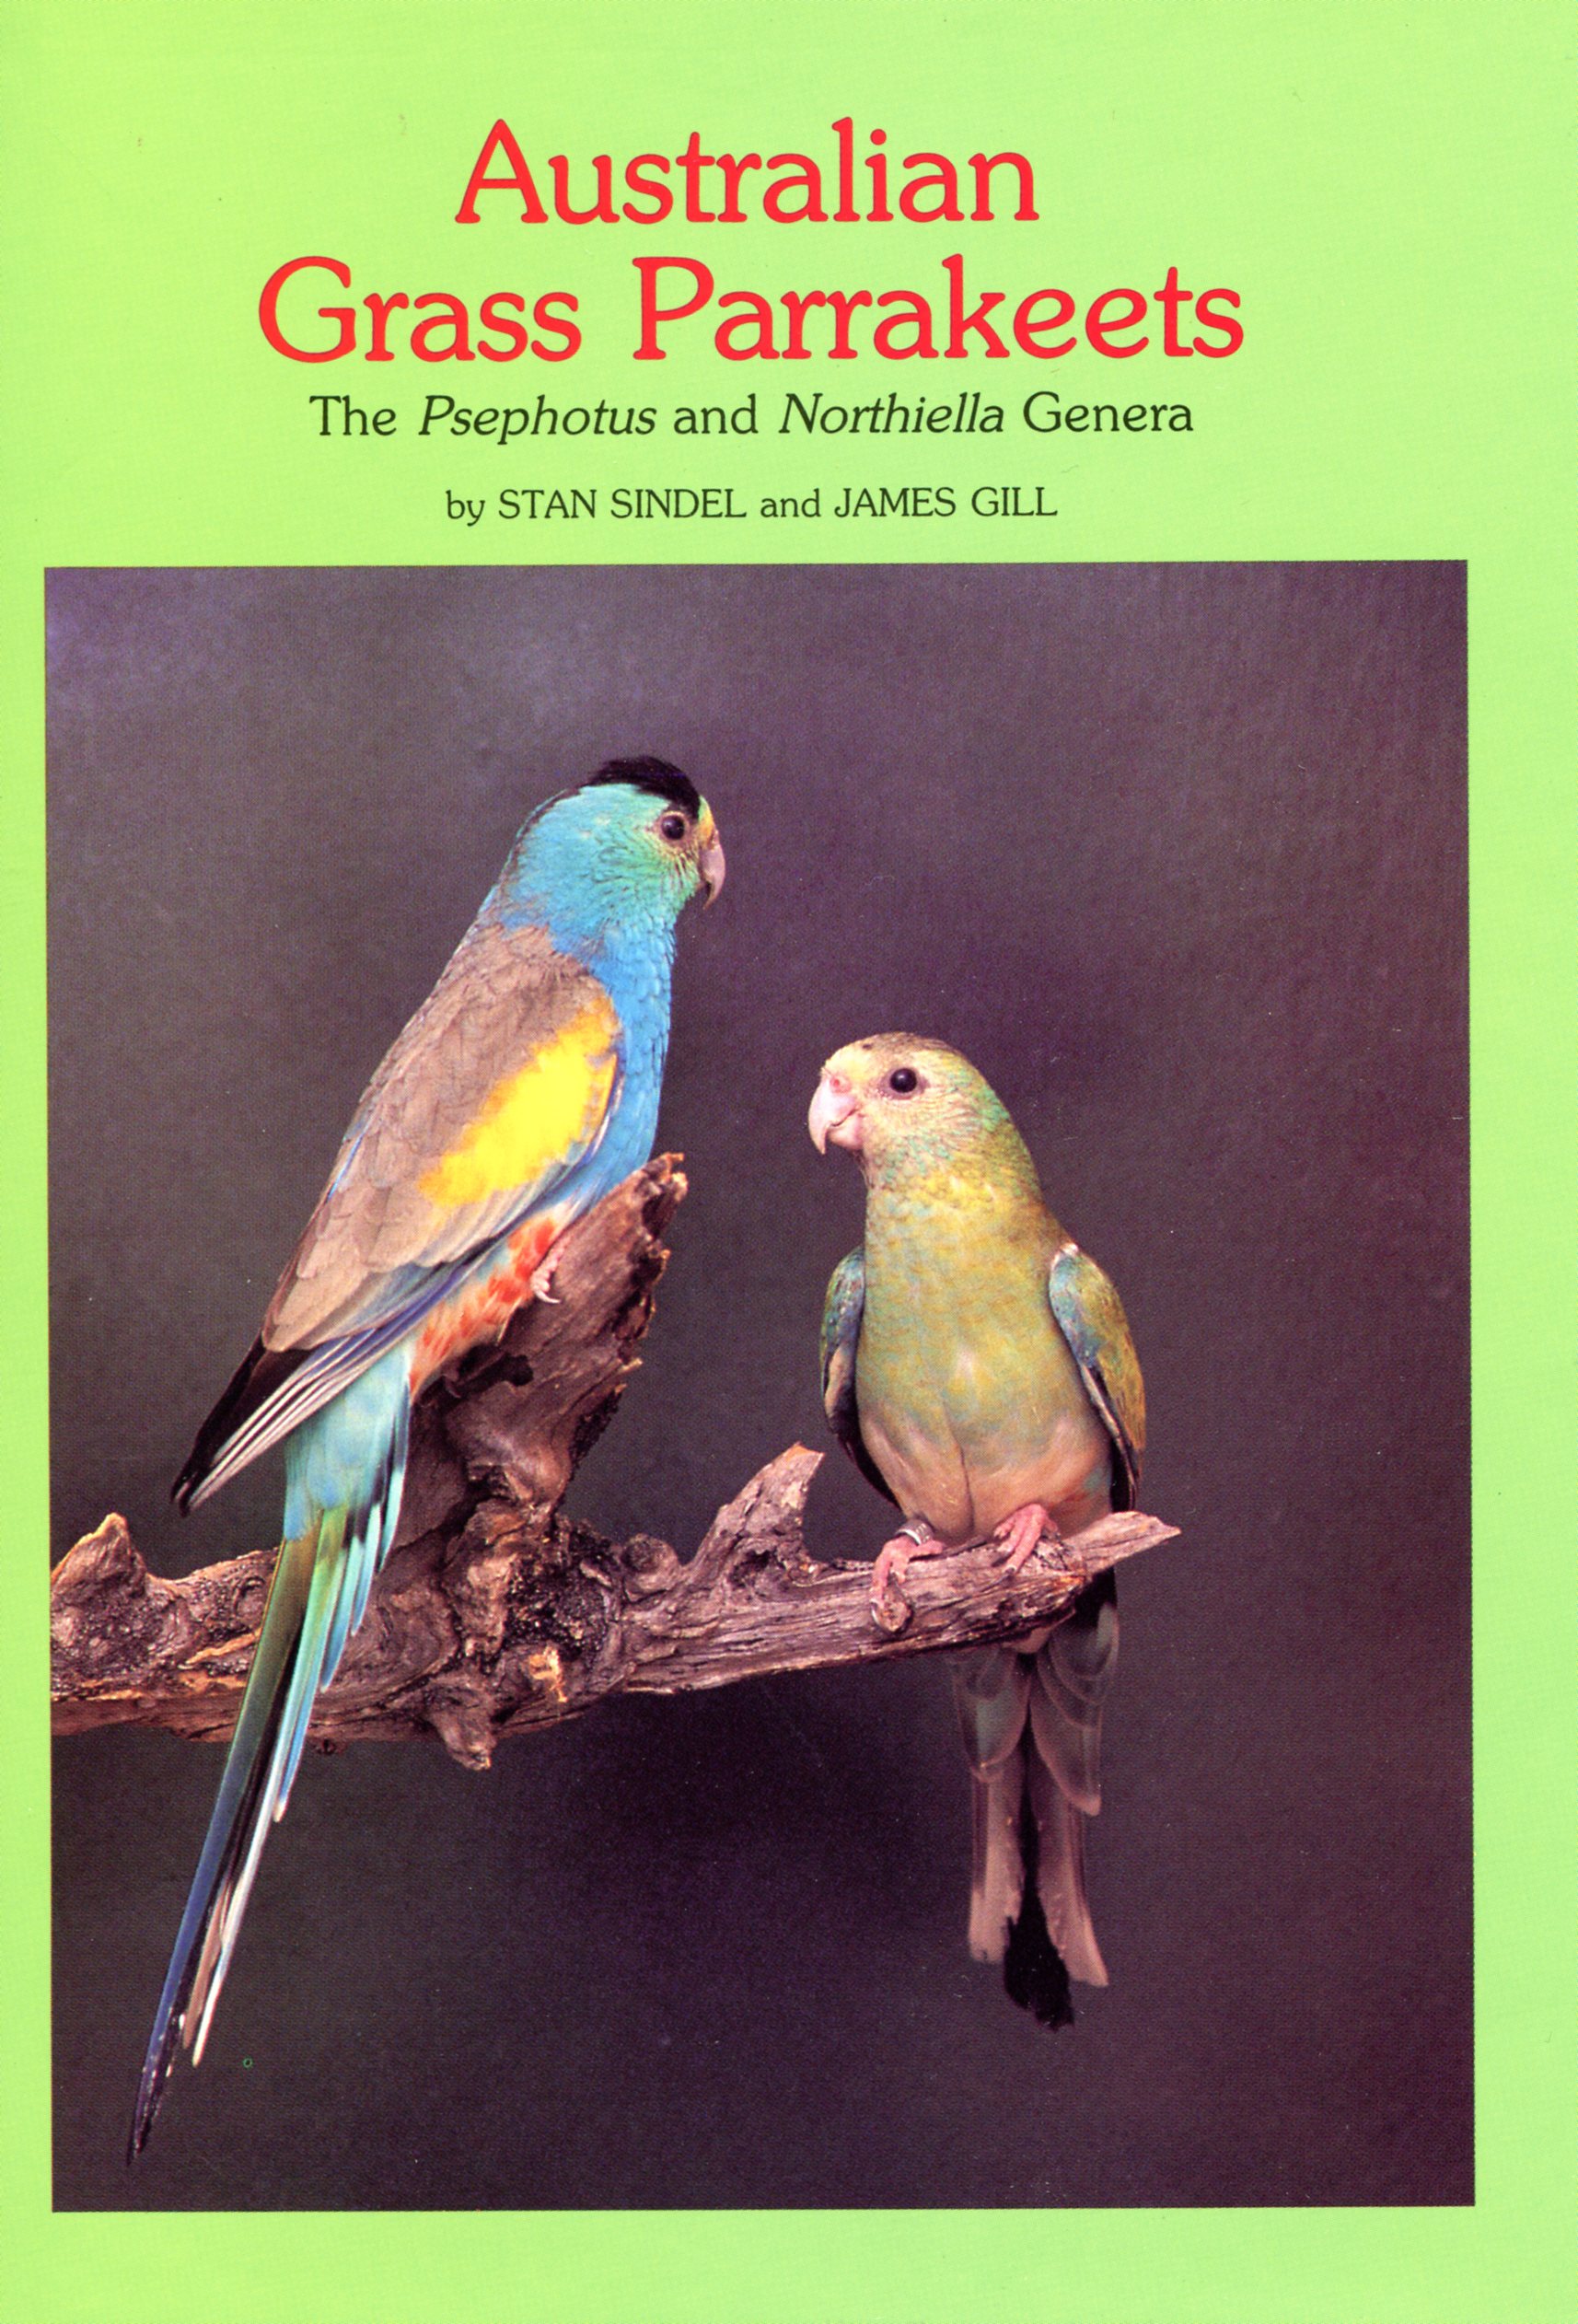 Australian Grass Parrakeets – The Psephotus and Northiella Genera